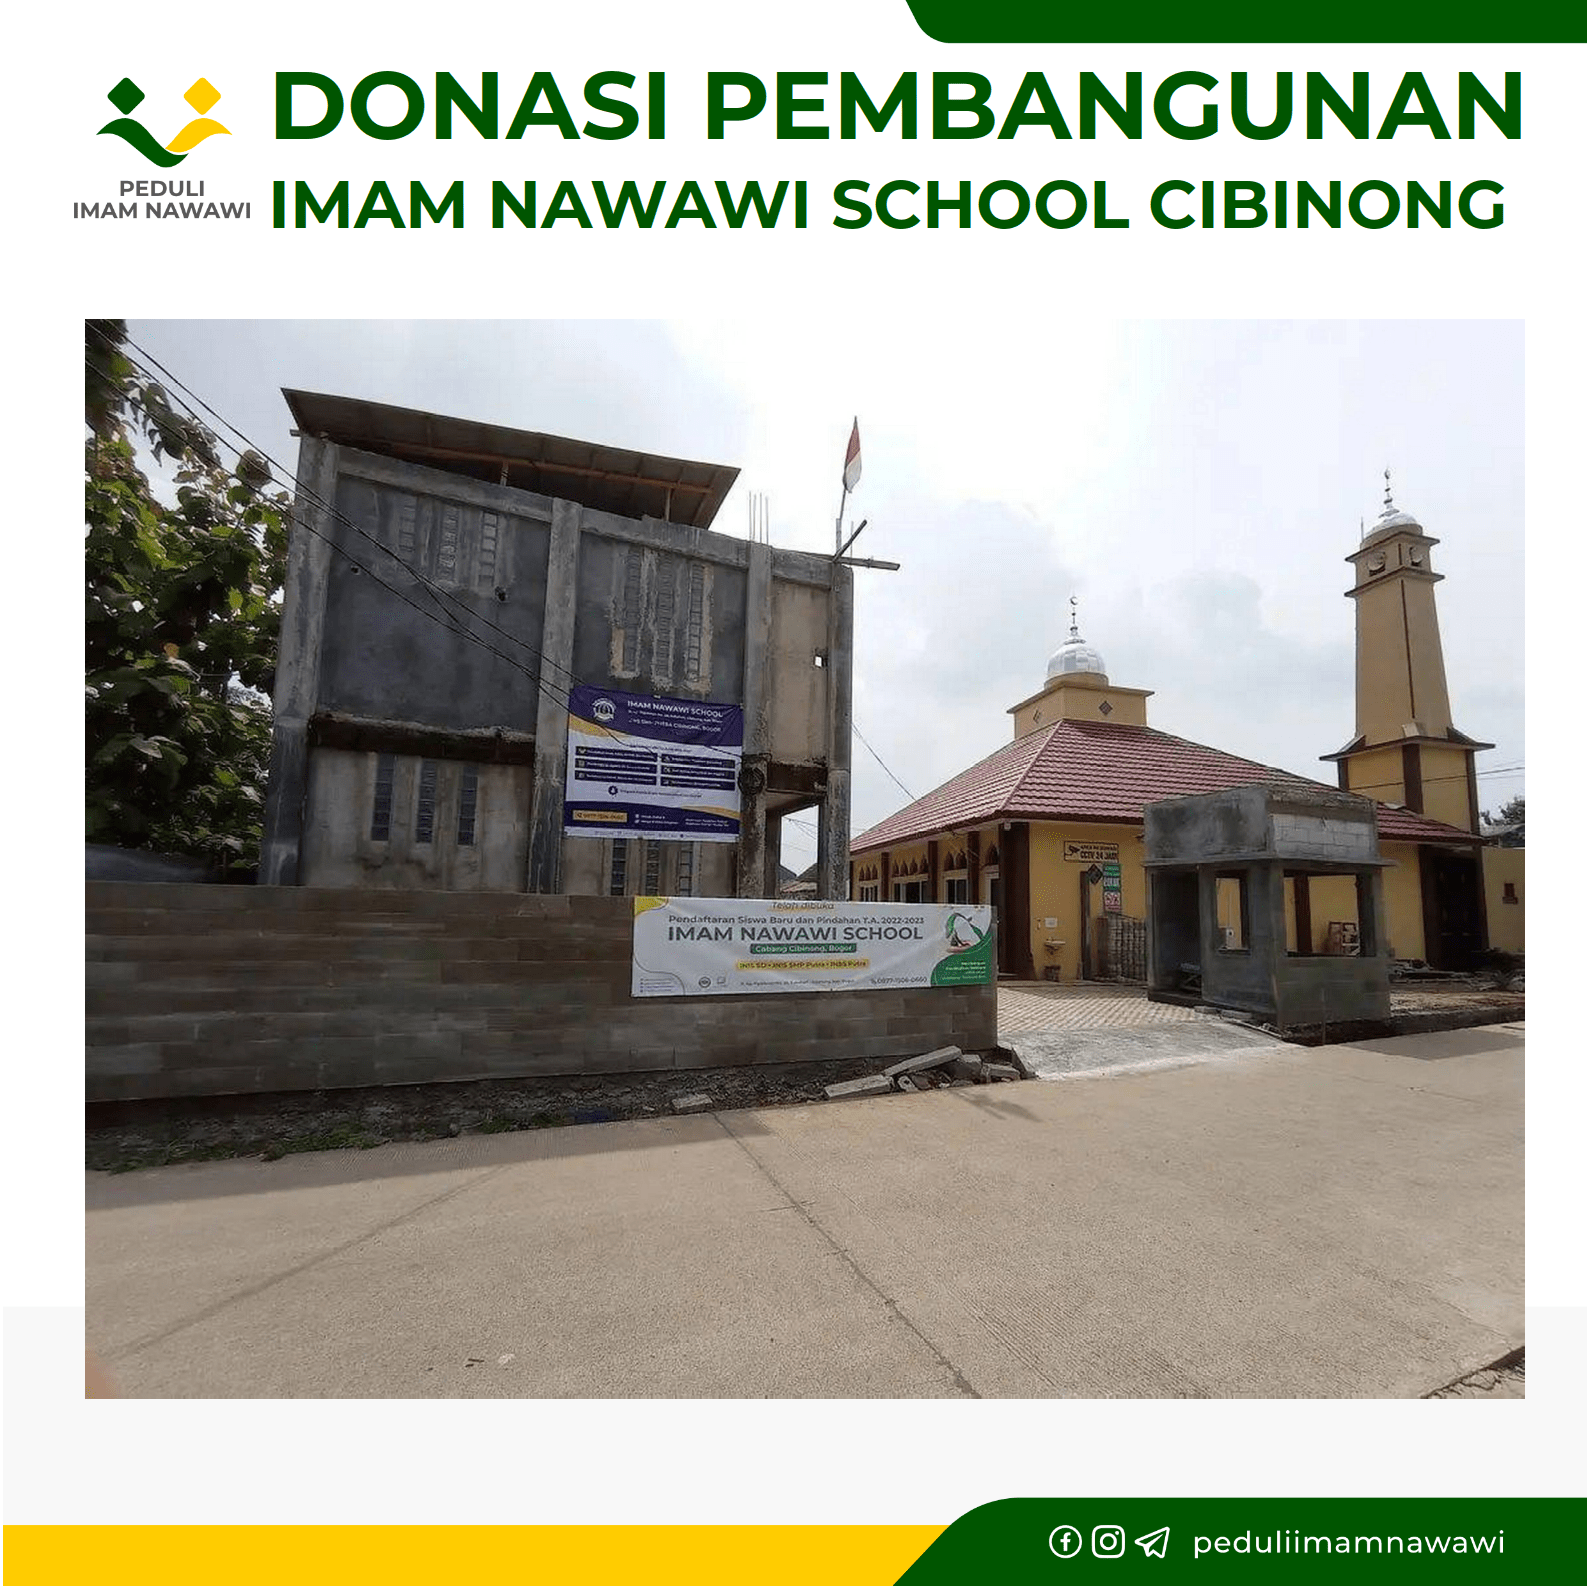 You are currently viewing Progress Pembangunan Imam Nawawi School Cibinong per akhir November 2021